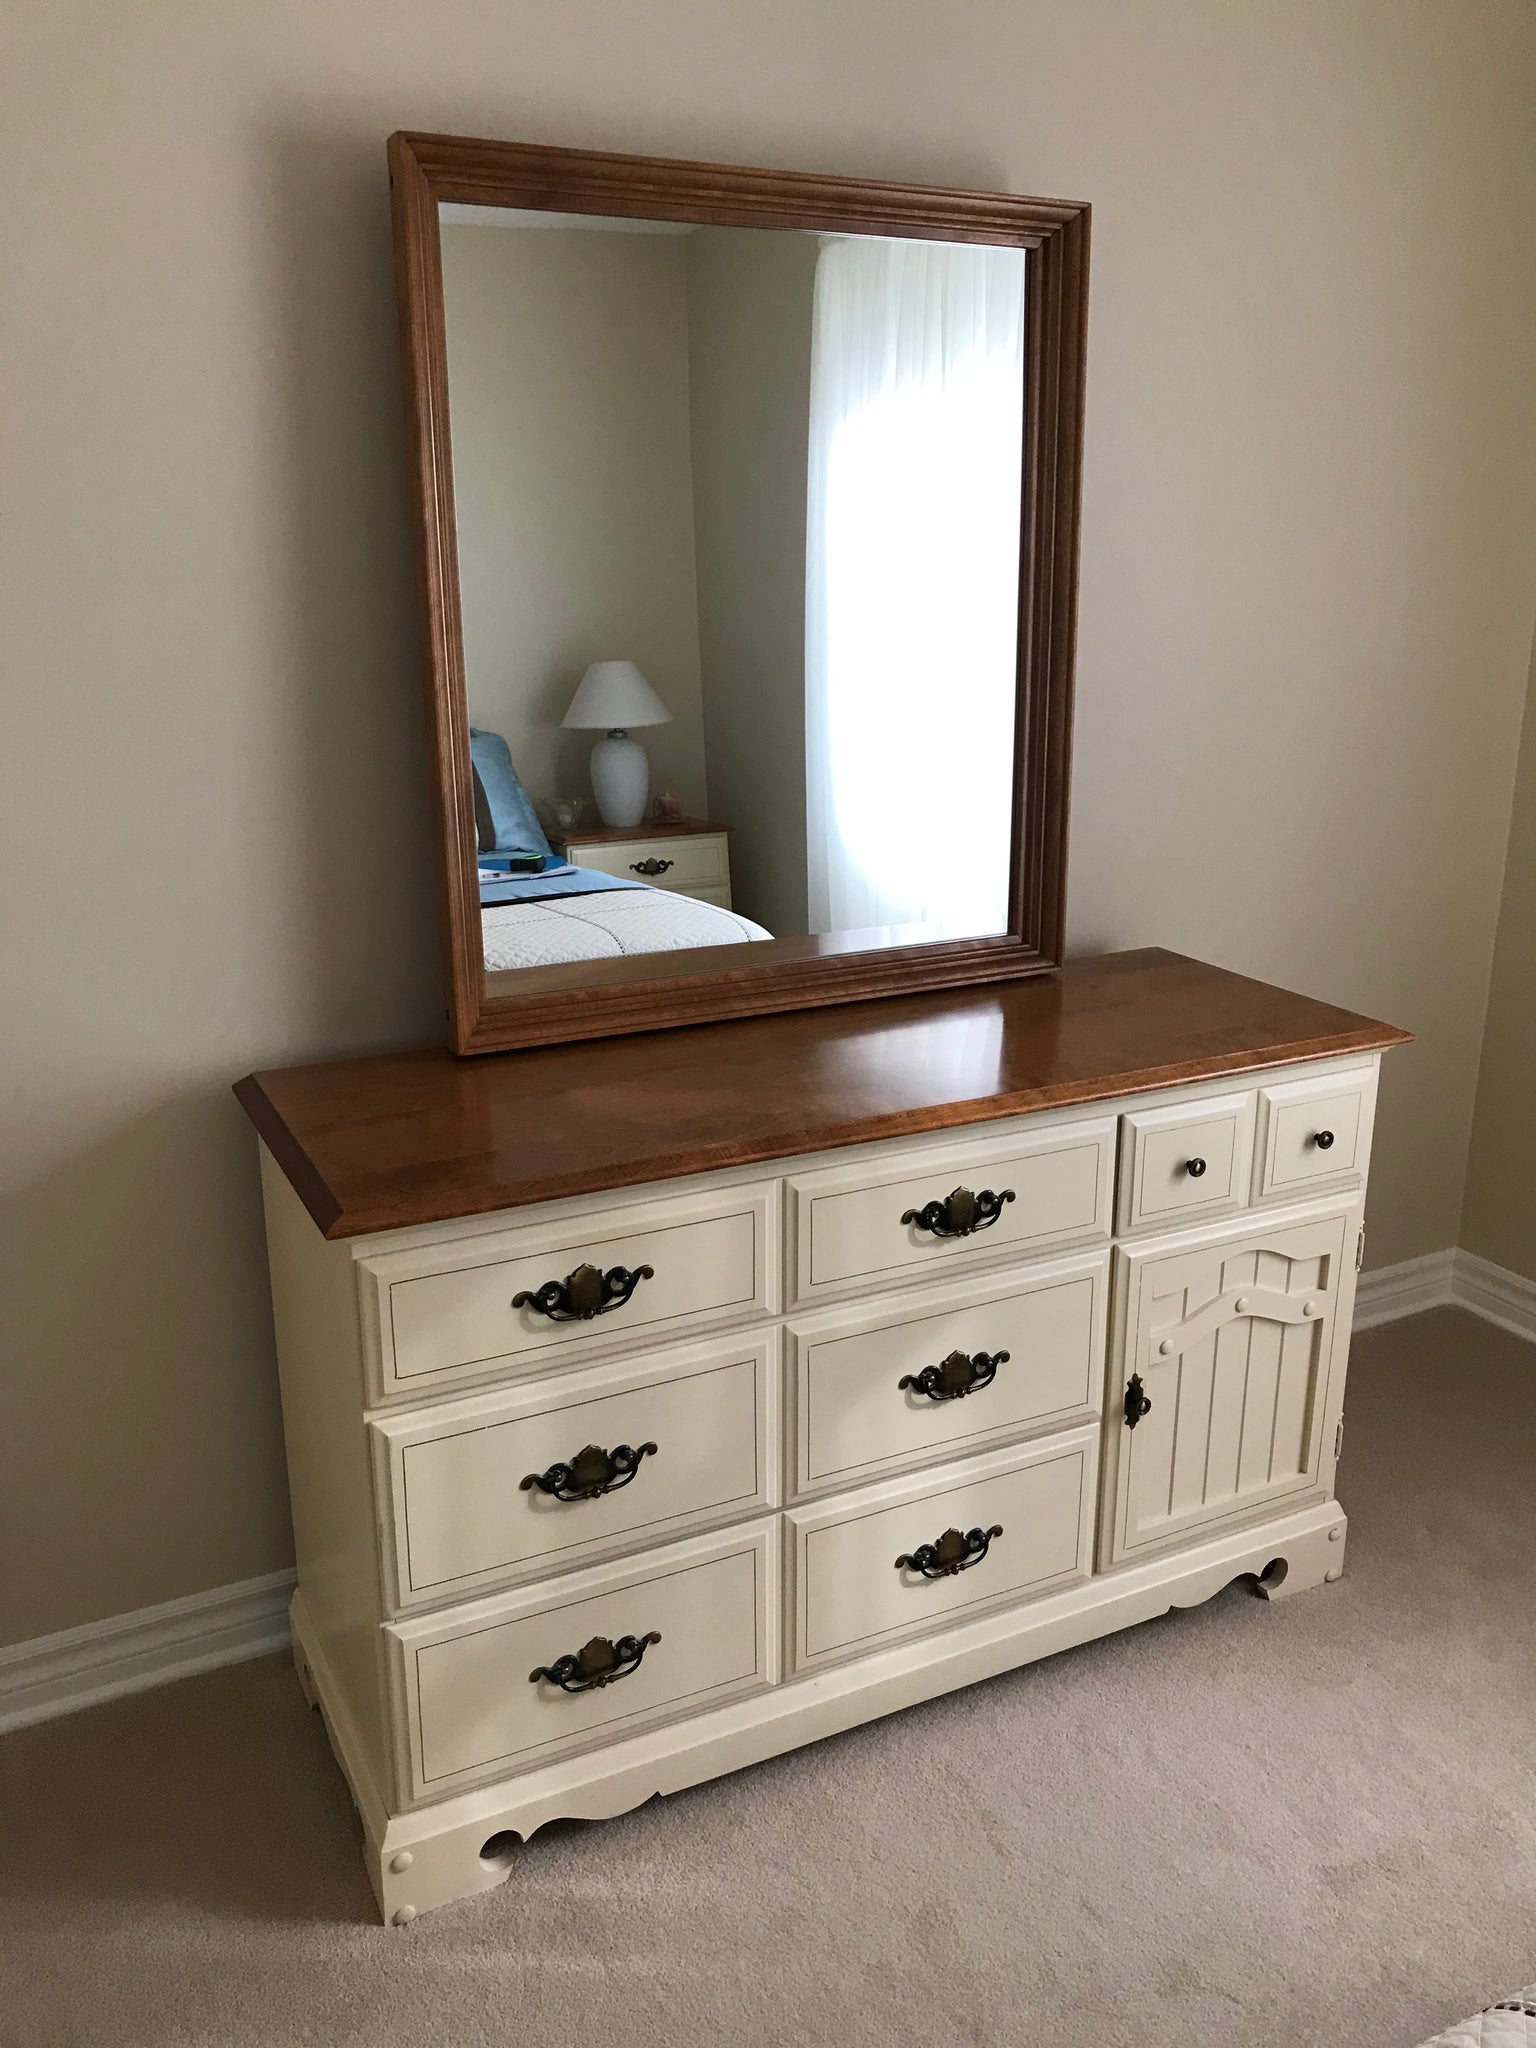 Dresser with matching mirror